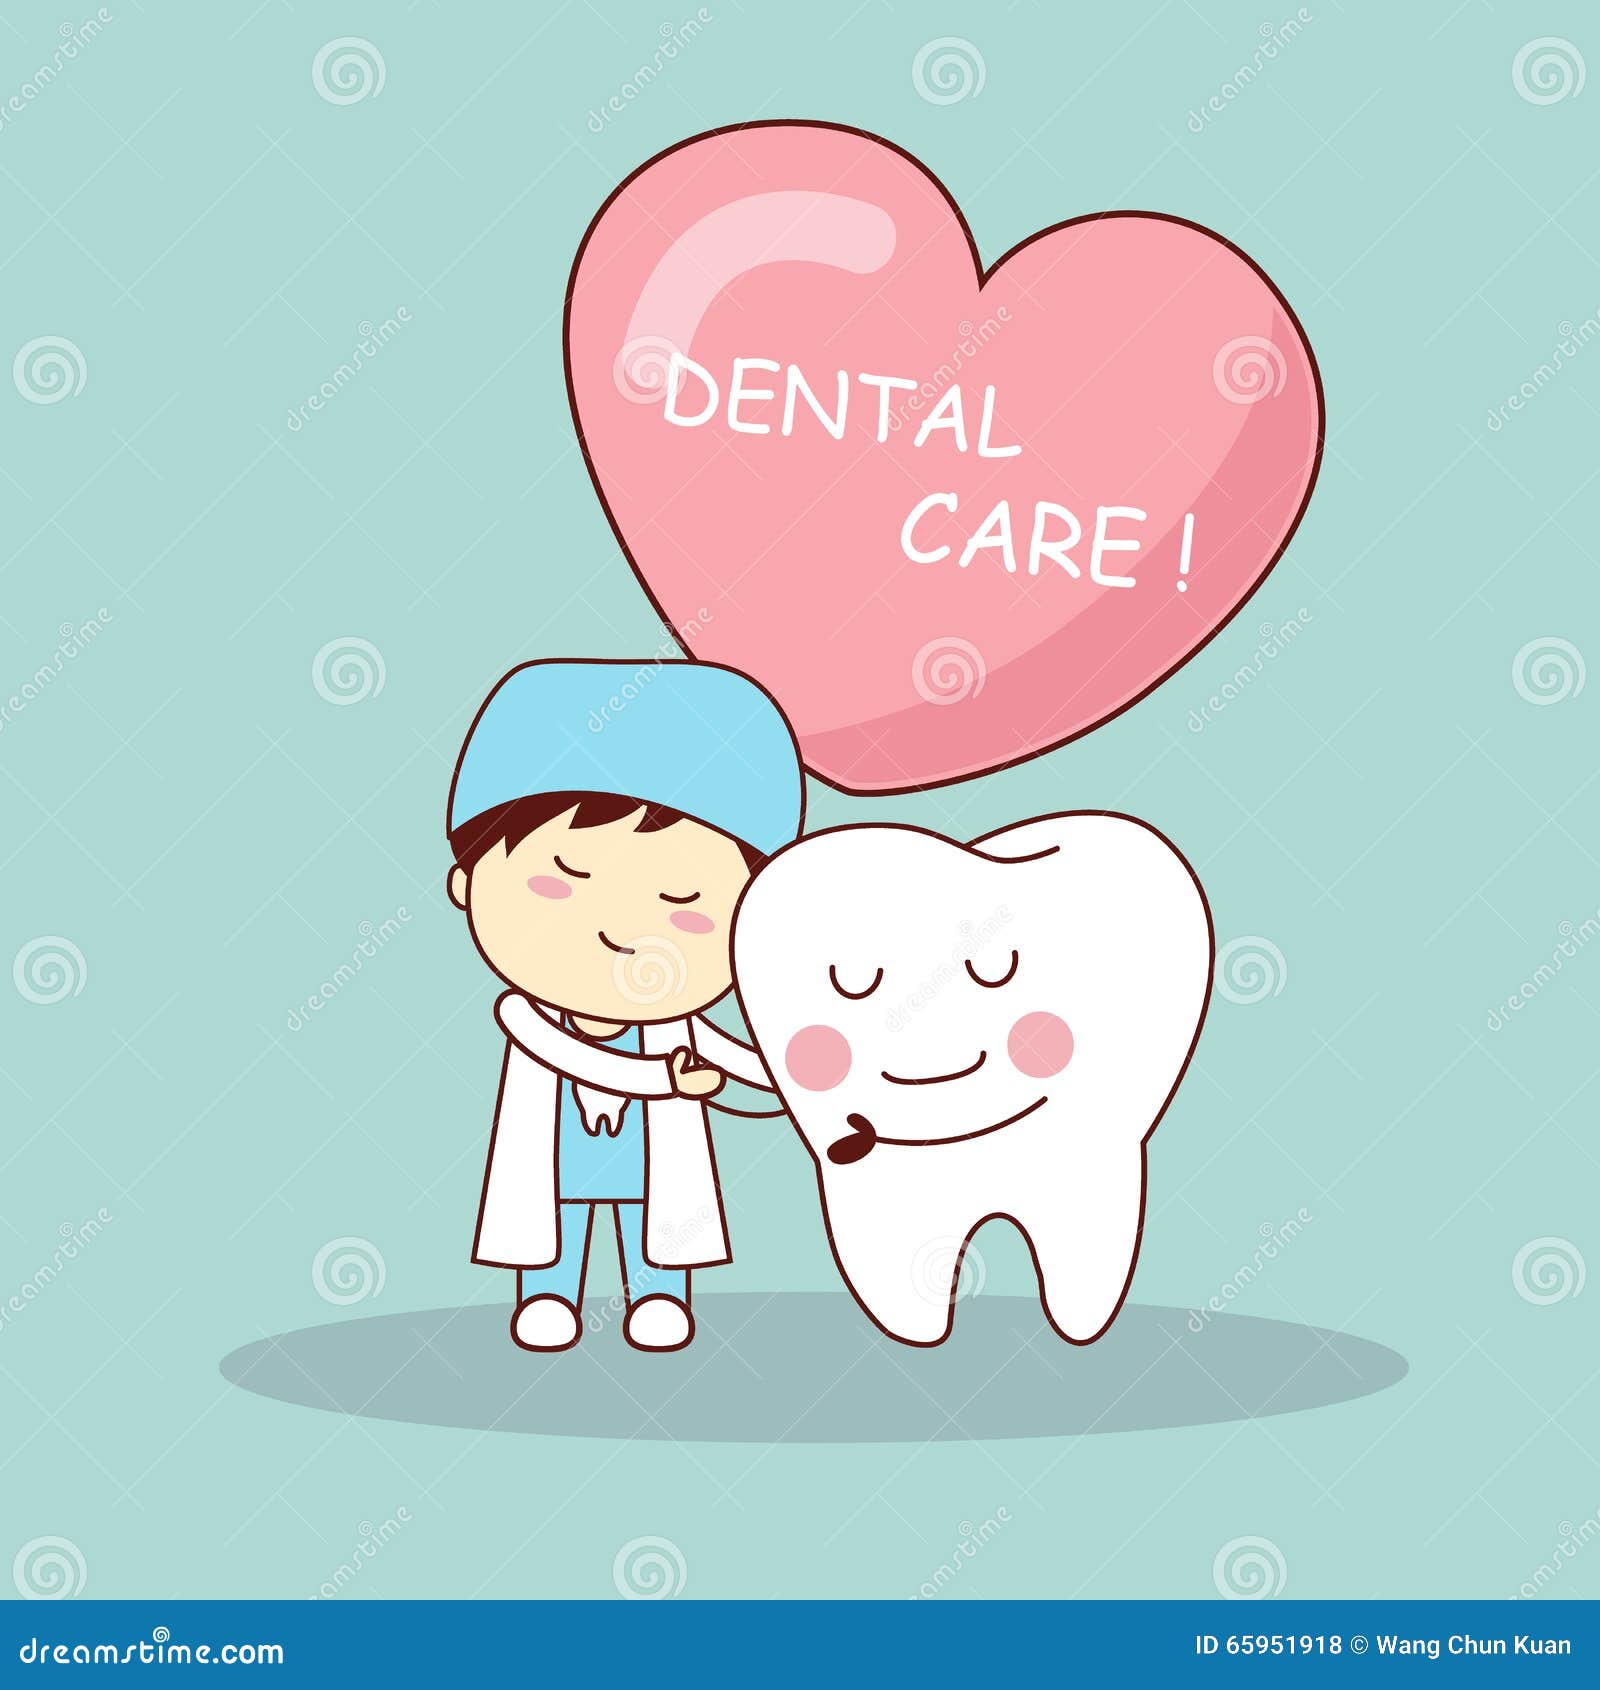 happy-cartoon-tooth-dentist-love-heart-great-health-dental-care-concept-65951918.jpg